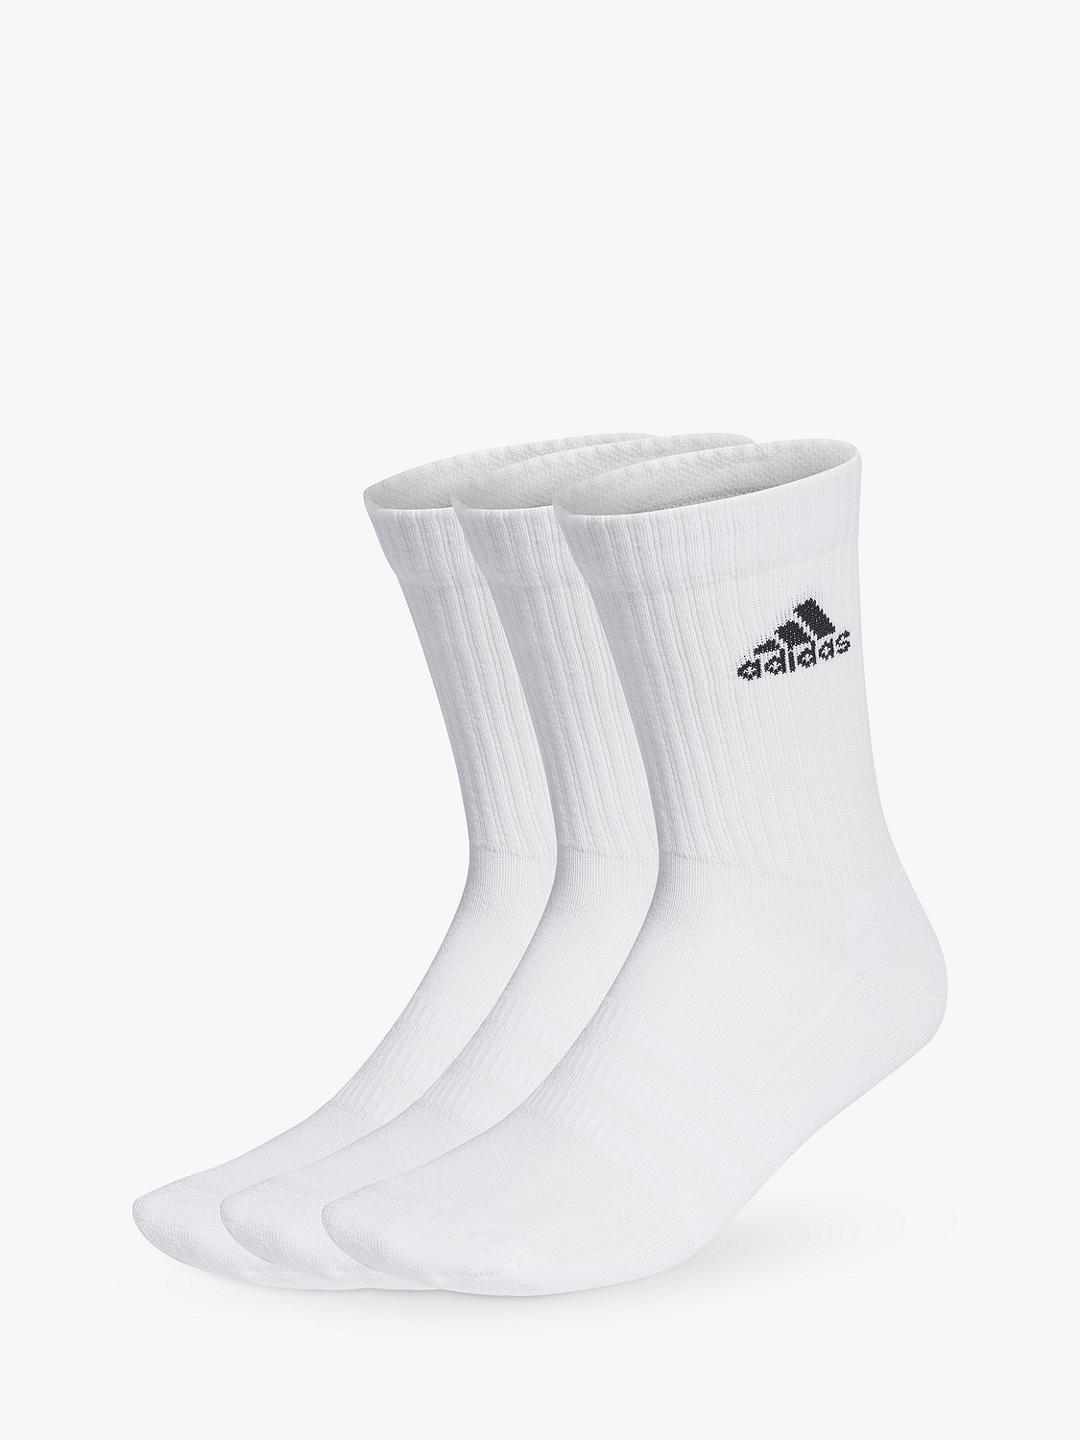 adidas Cushioned Crew Socks, Pack of 3, White/Black